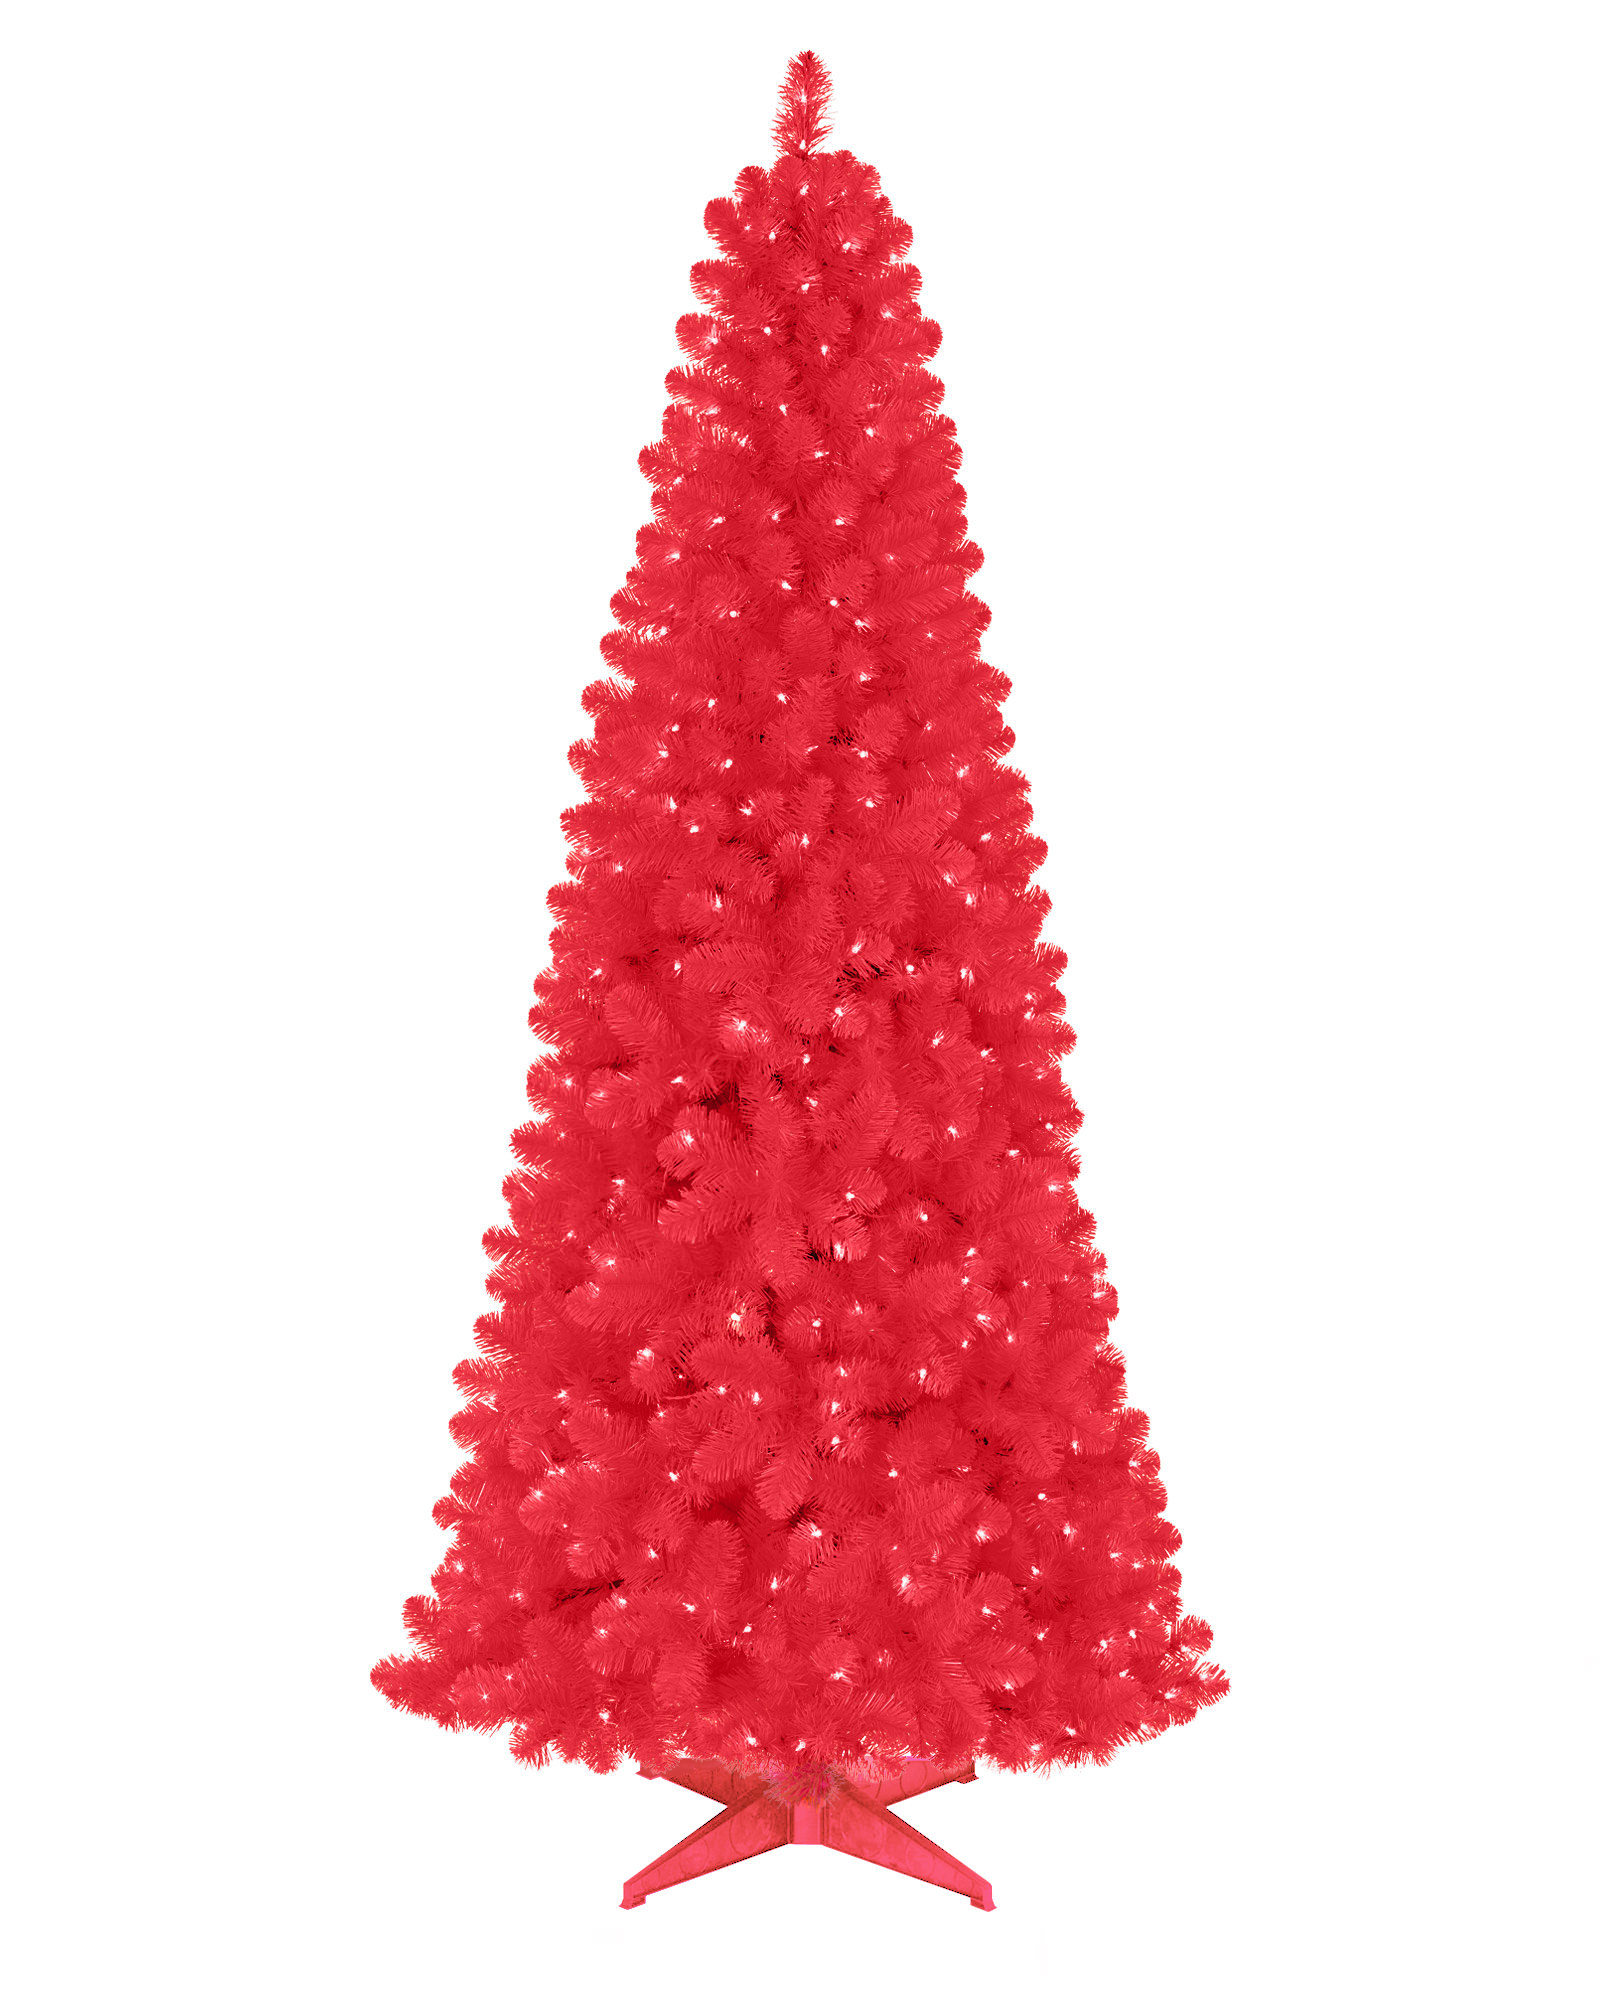 Hot Pink Christmas Tree drawing free image download